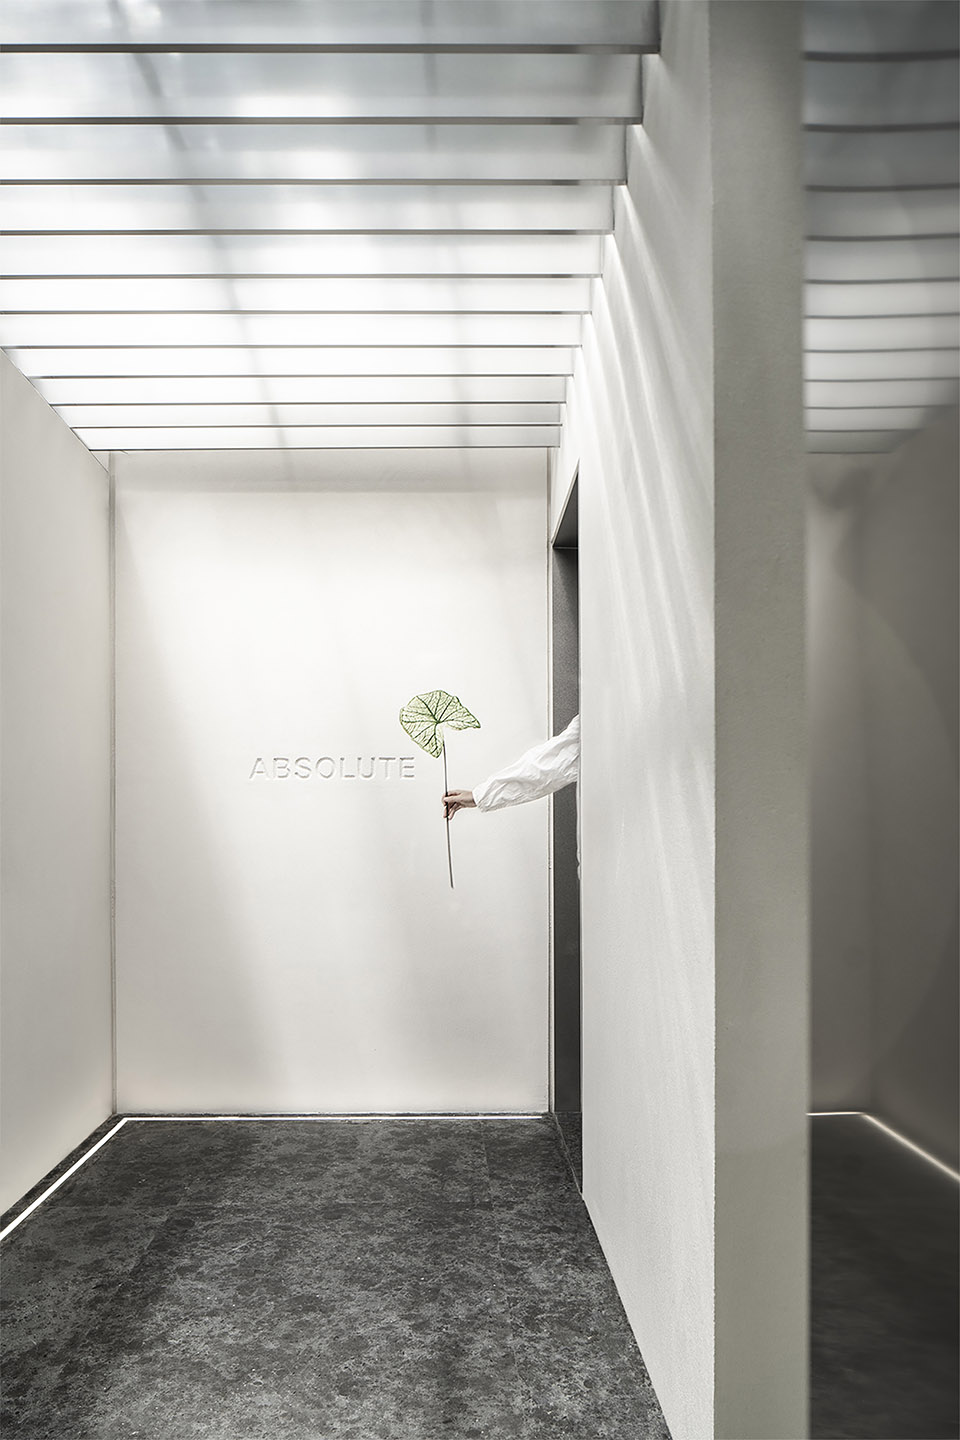 Absolute精品花艺店，上海/烘托花卉艺术的简约纯净空间-23